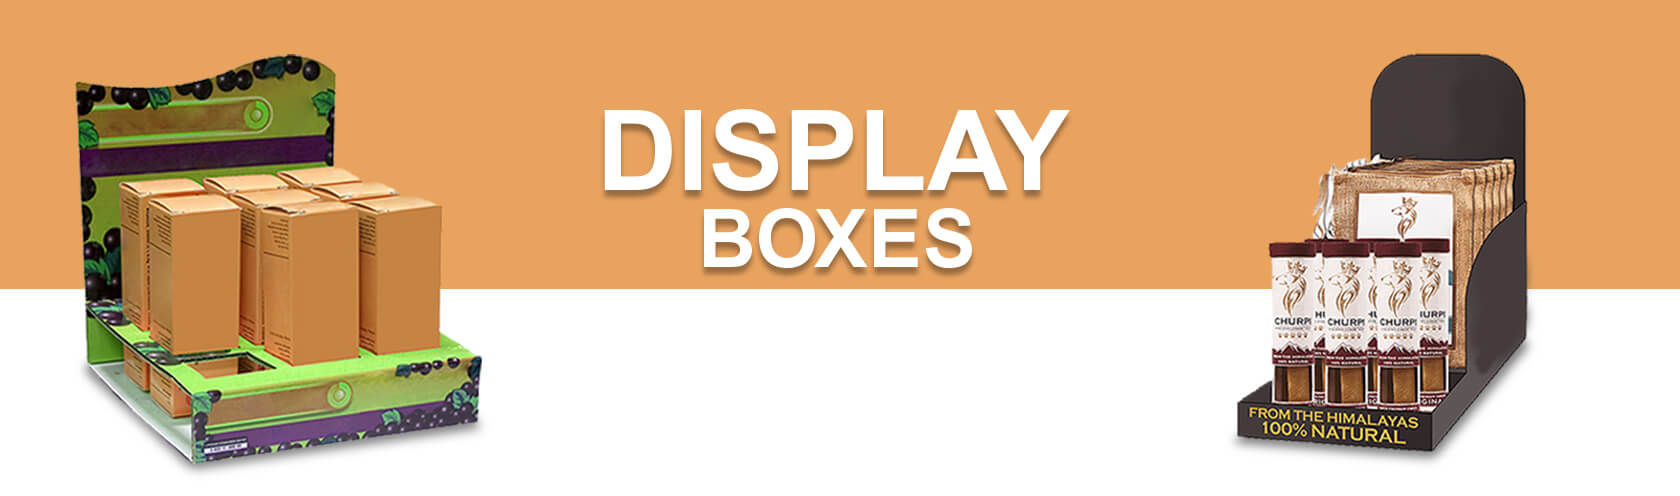 display-boxes-banner-blog